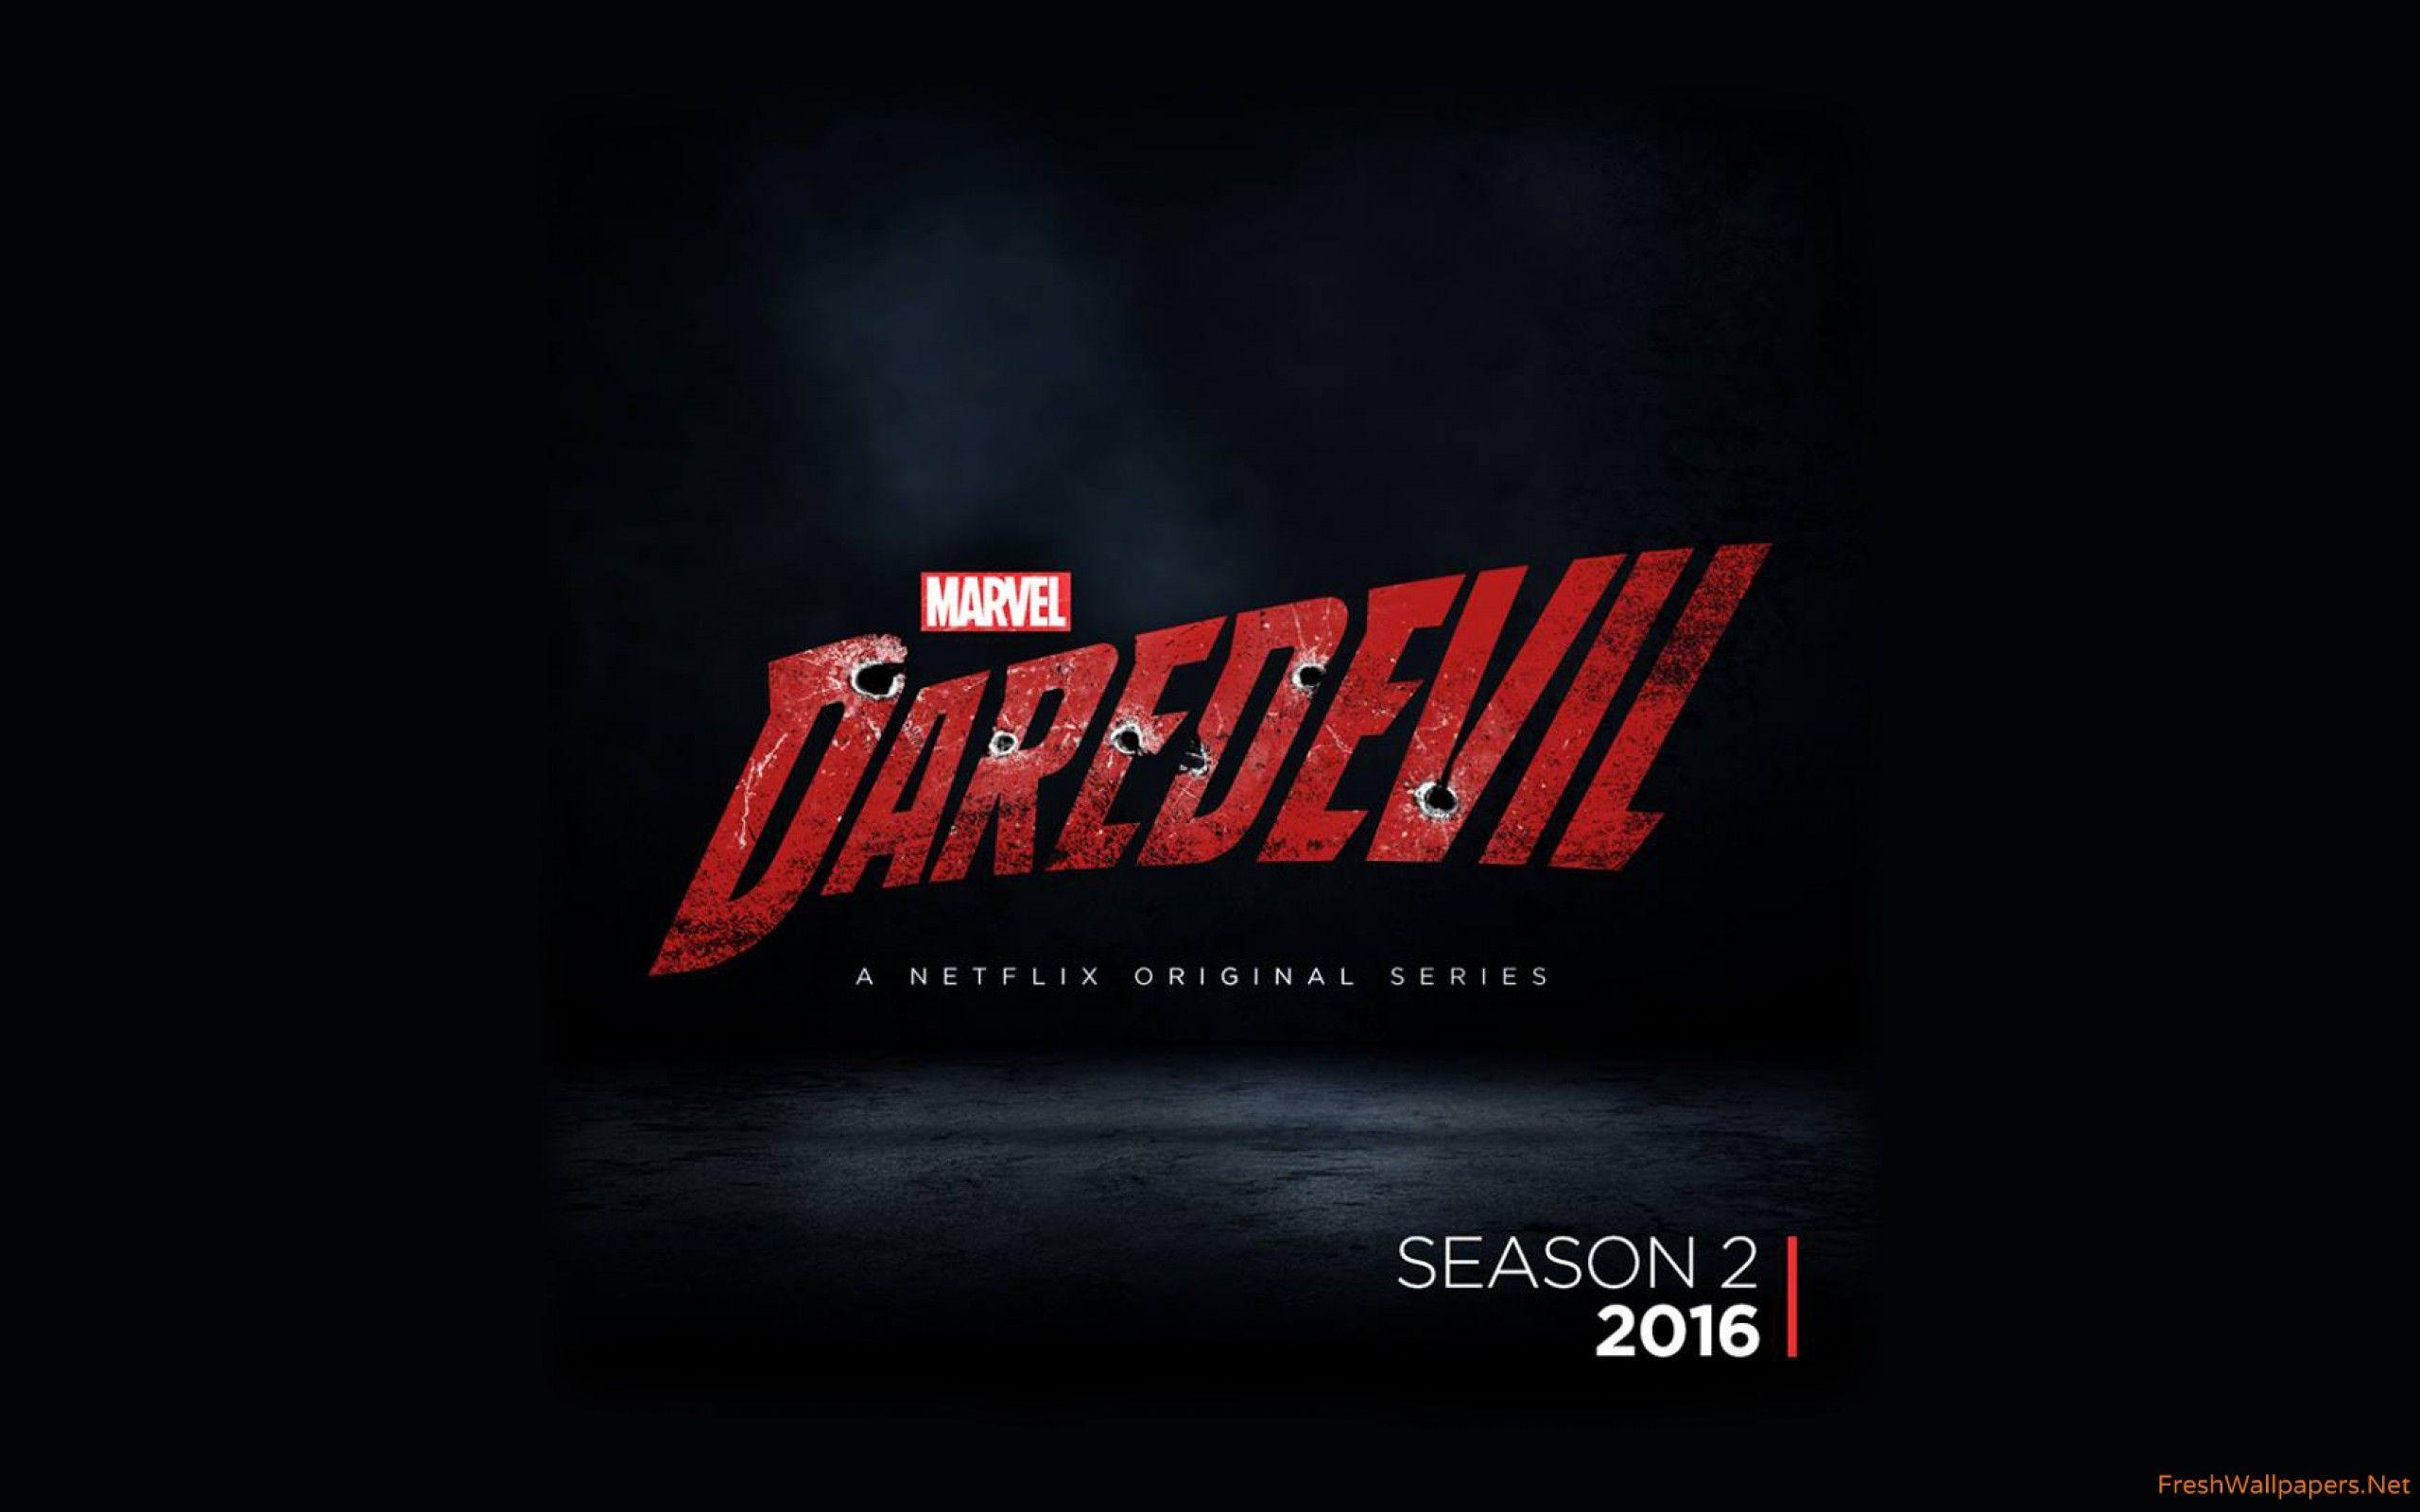 Daredevil Season 2 2016 wallpaper